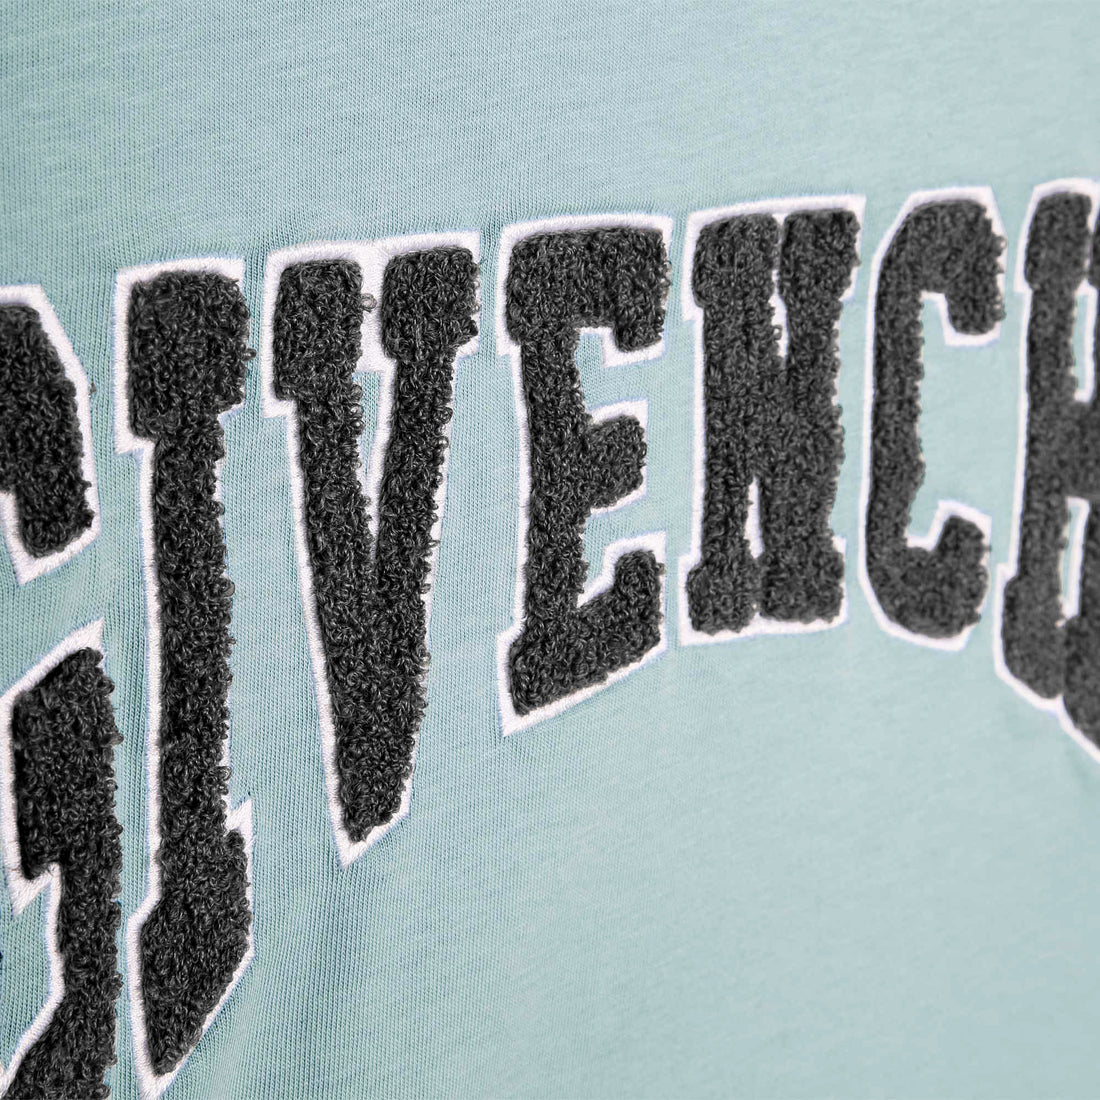 Givenchy Short Sleeves Tee-Shirt Style: H25452